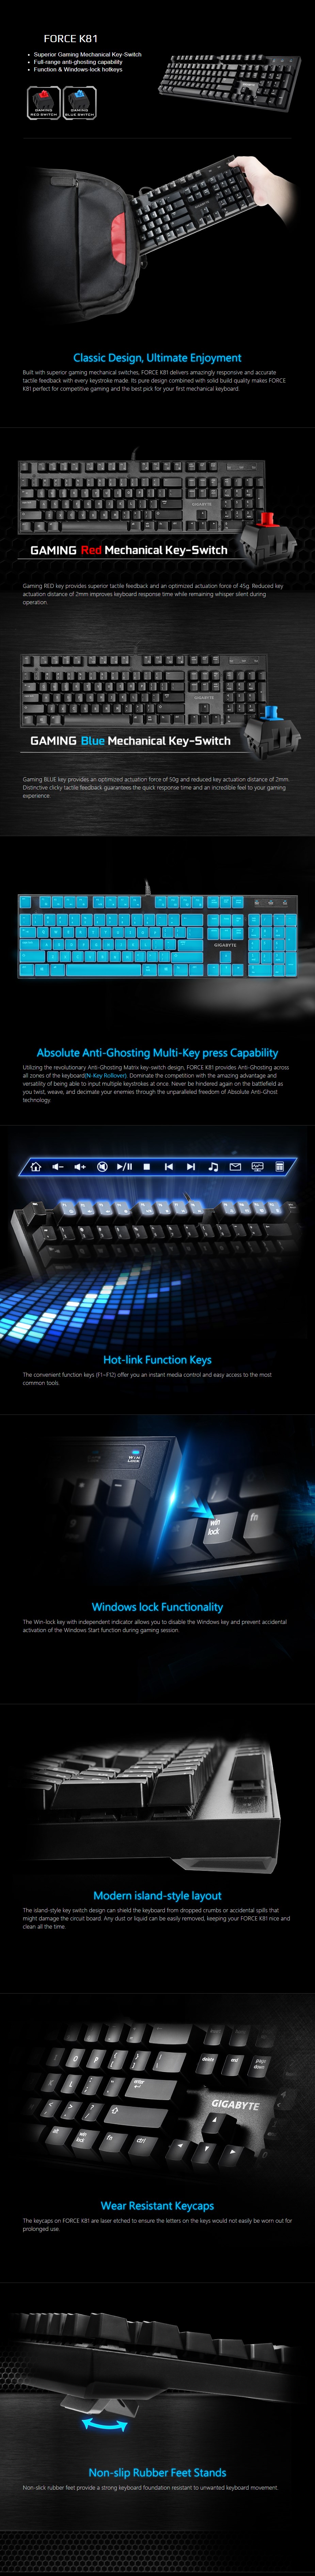 Gigabyte FORCE K81 Mechanical Gaming Keyboard - Cherry MX Red - Desktop Overview 1